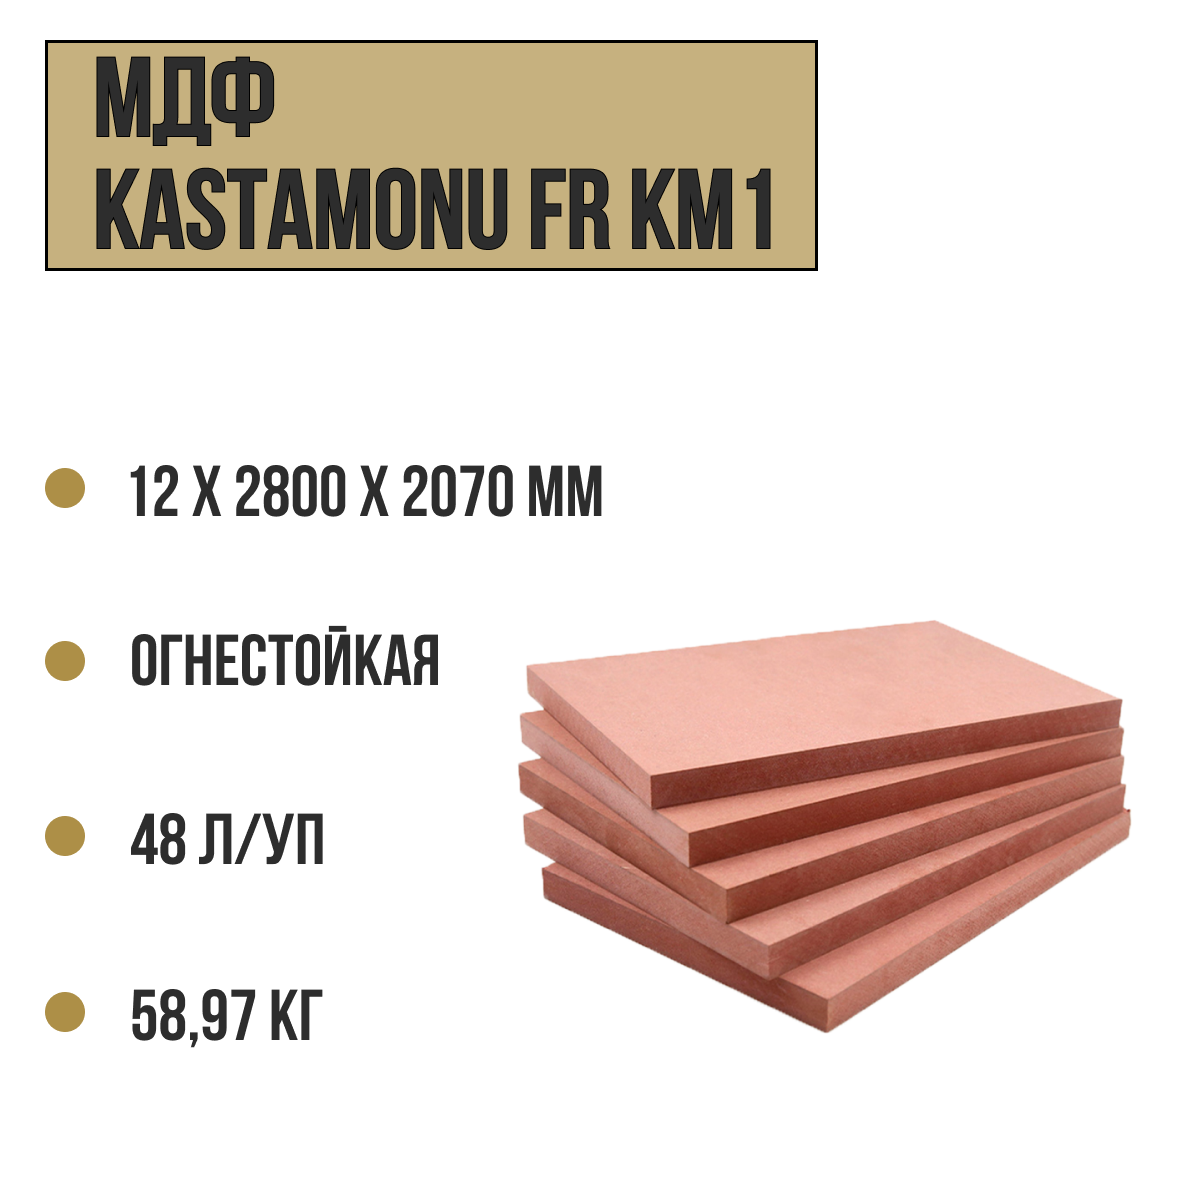 МДФ Kastamonu FR KM1 - огнестойкая плита ш2 10ммх2800х2070 (60л/уп, вес 49,20кг)